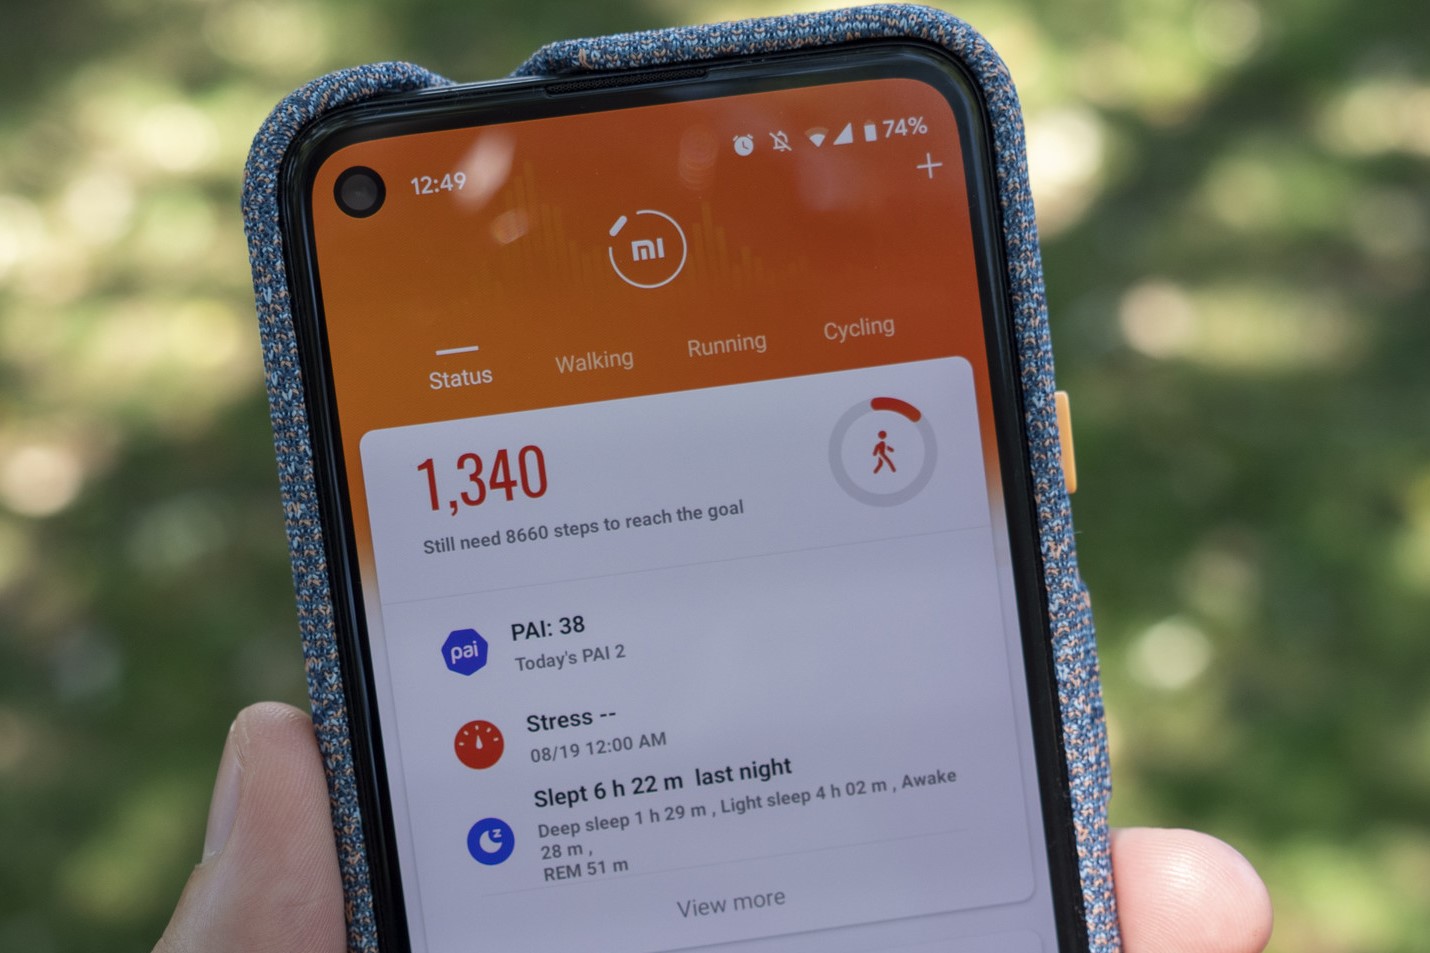 Xiaomi Mi Band App: A Quick Overview